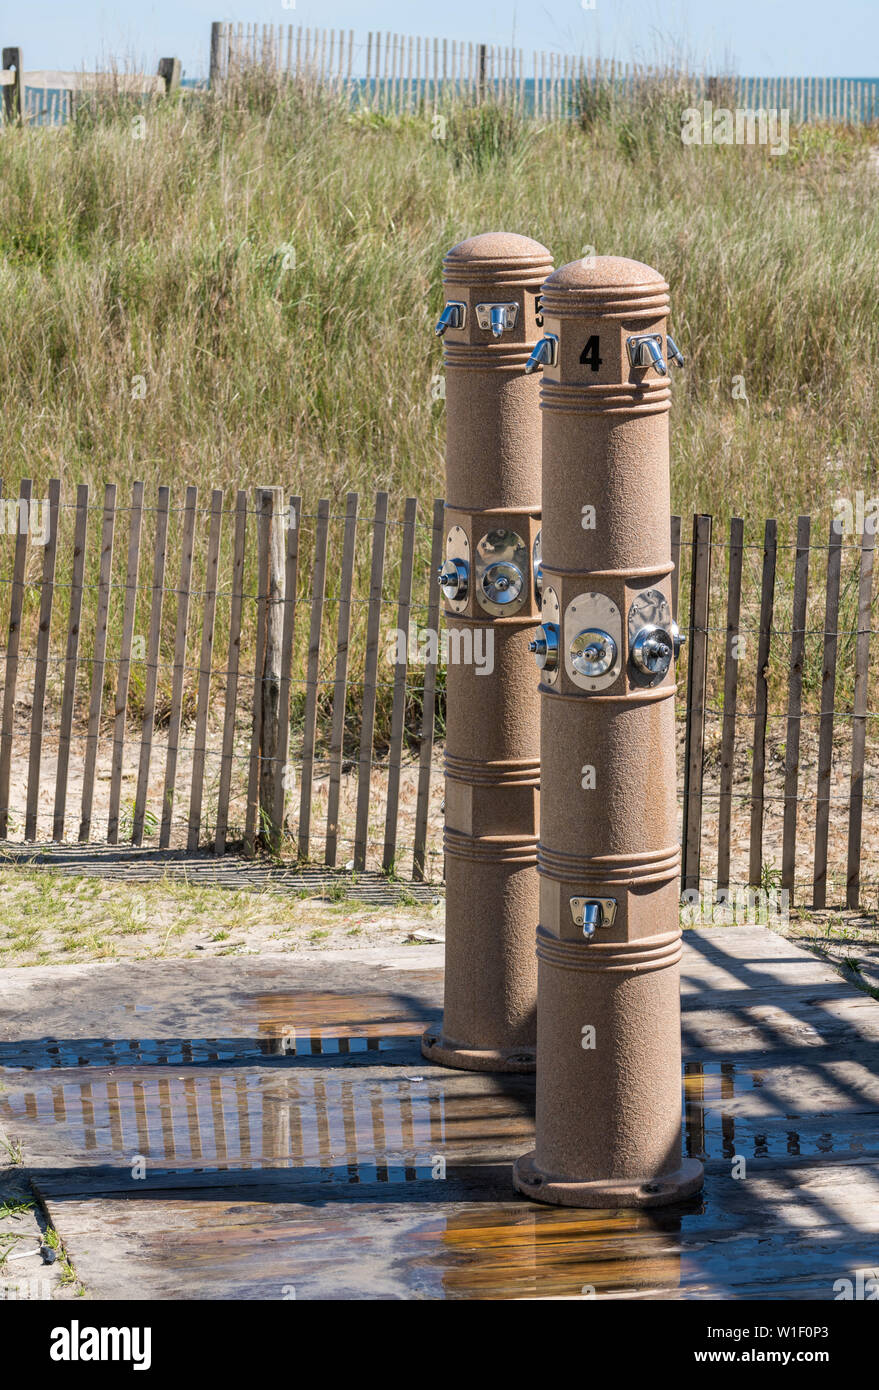 Outdoor Duschen am Strand in Atlantic City in New Jersey Küste  Stockfotografie - Alamy